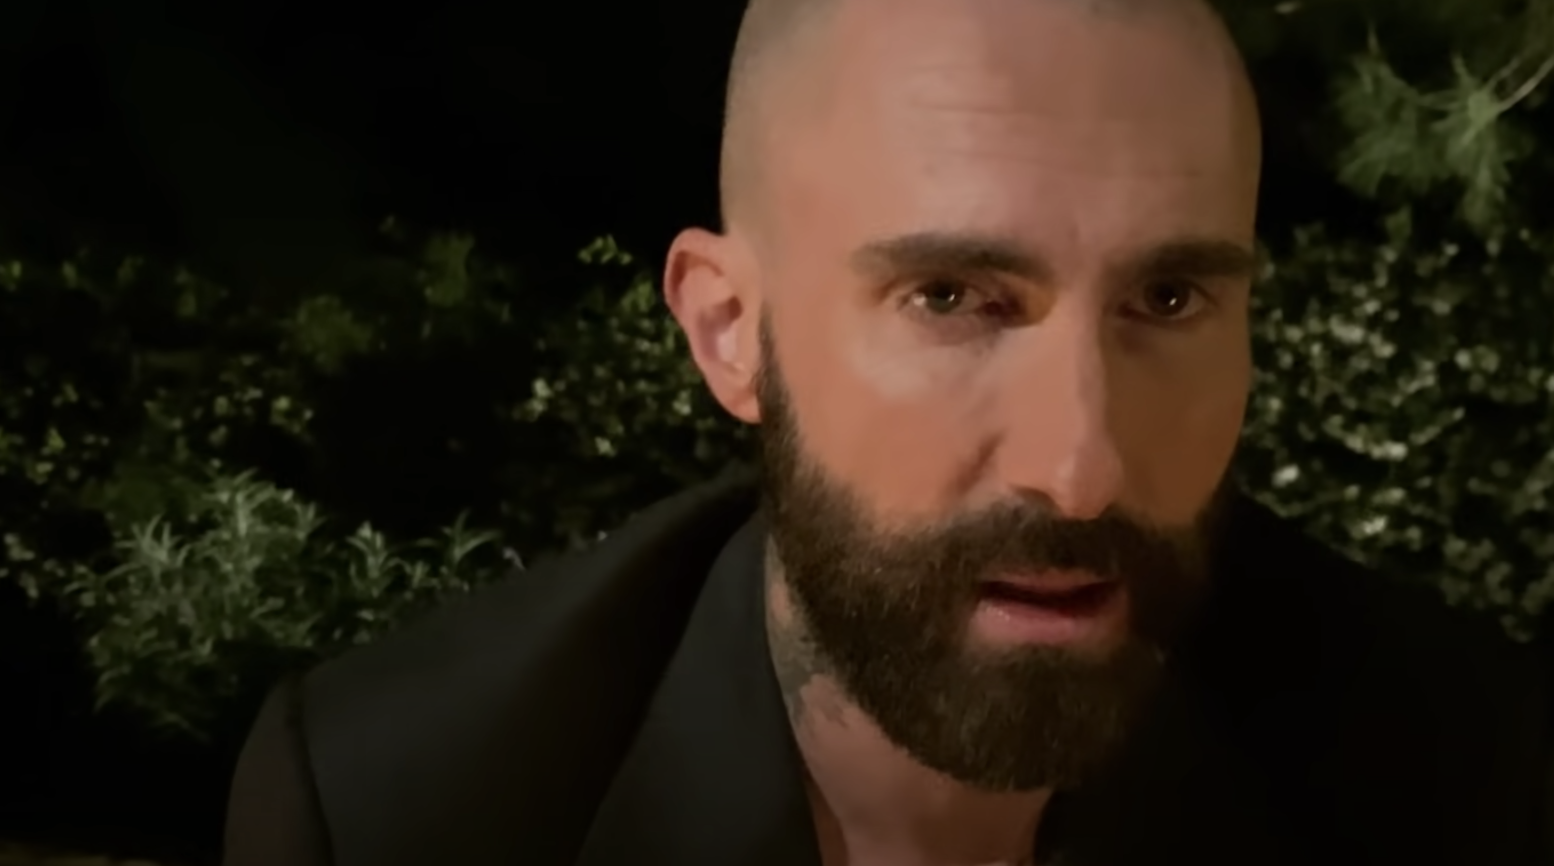 Adam bald with a full beard